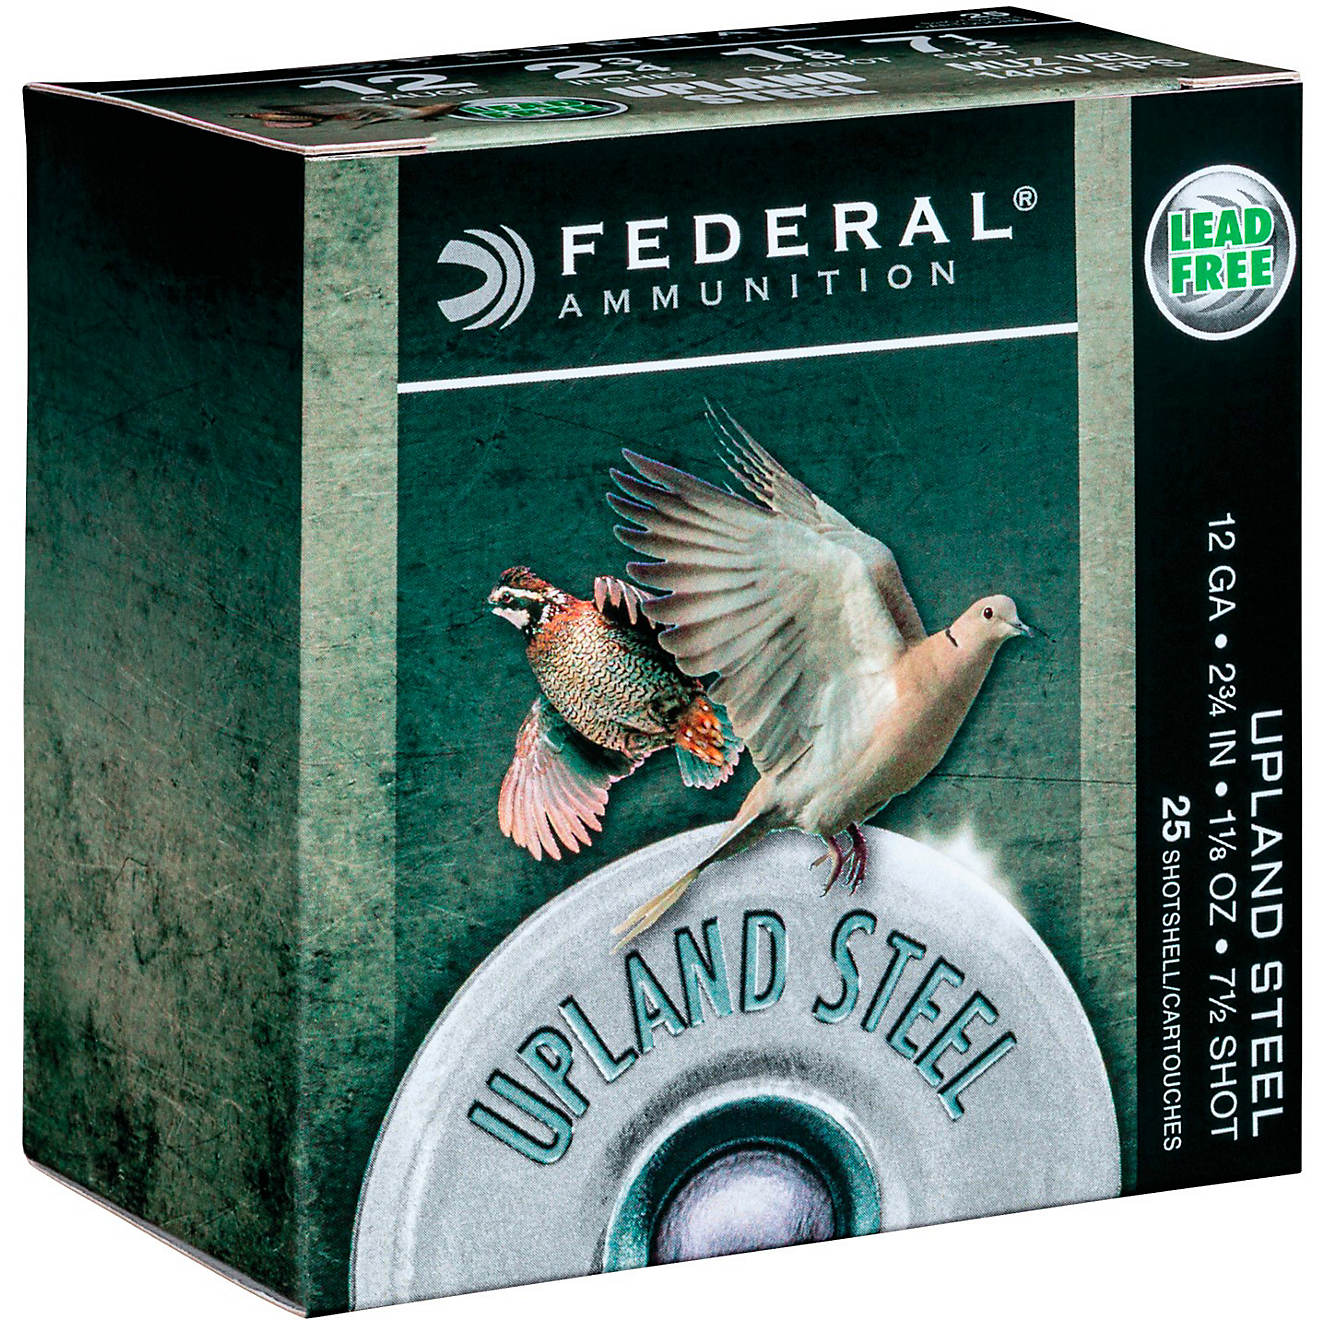 Federal Premium Upland Steel 12 Gauge Shotshells - 25 Rounds                                                                     - view number 1